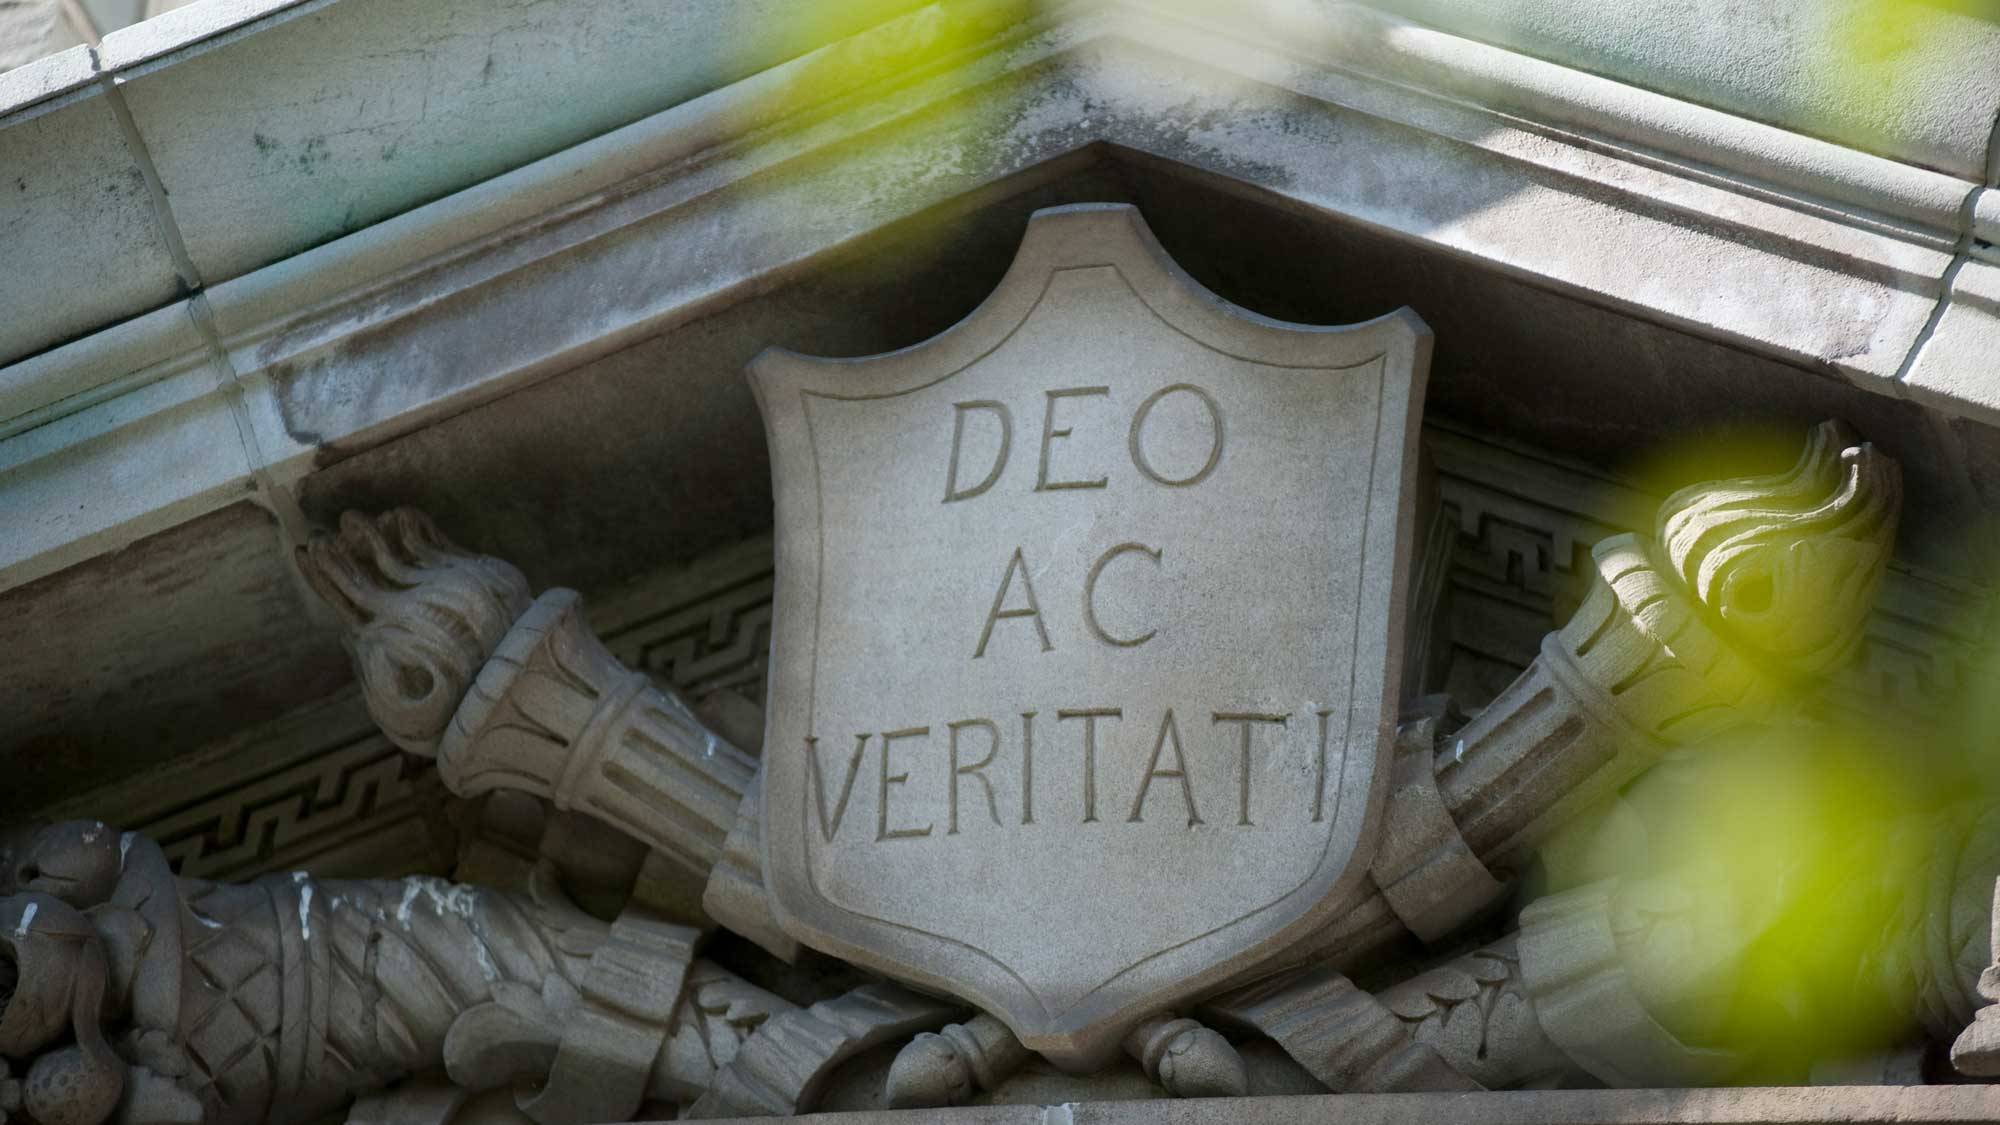 deo ac veritati inscribed in stone shield